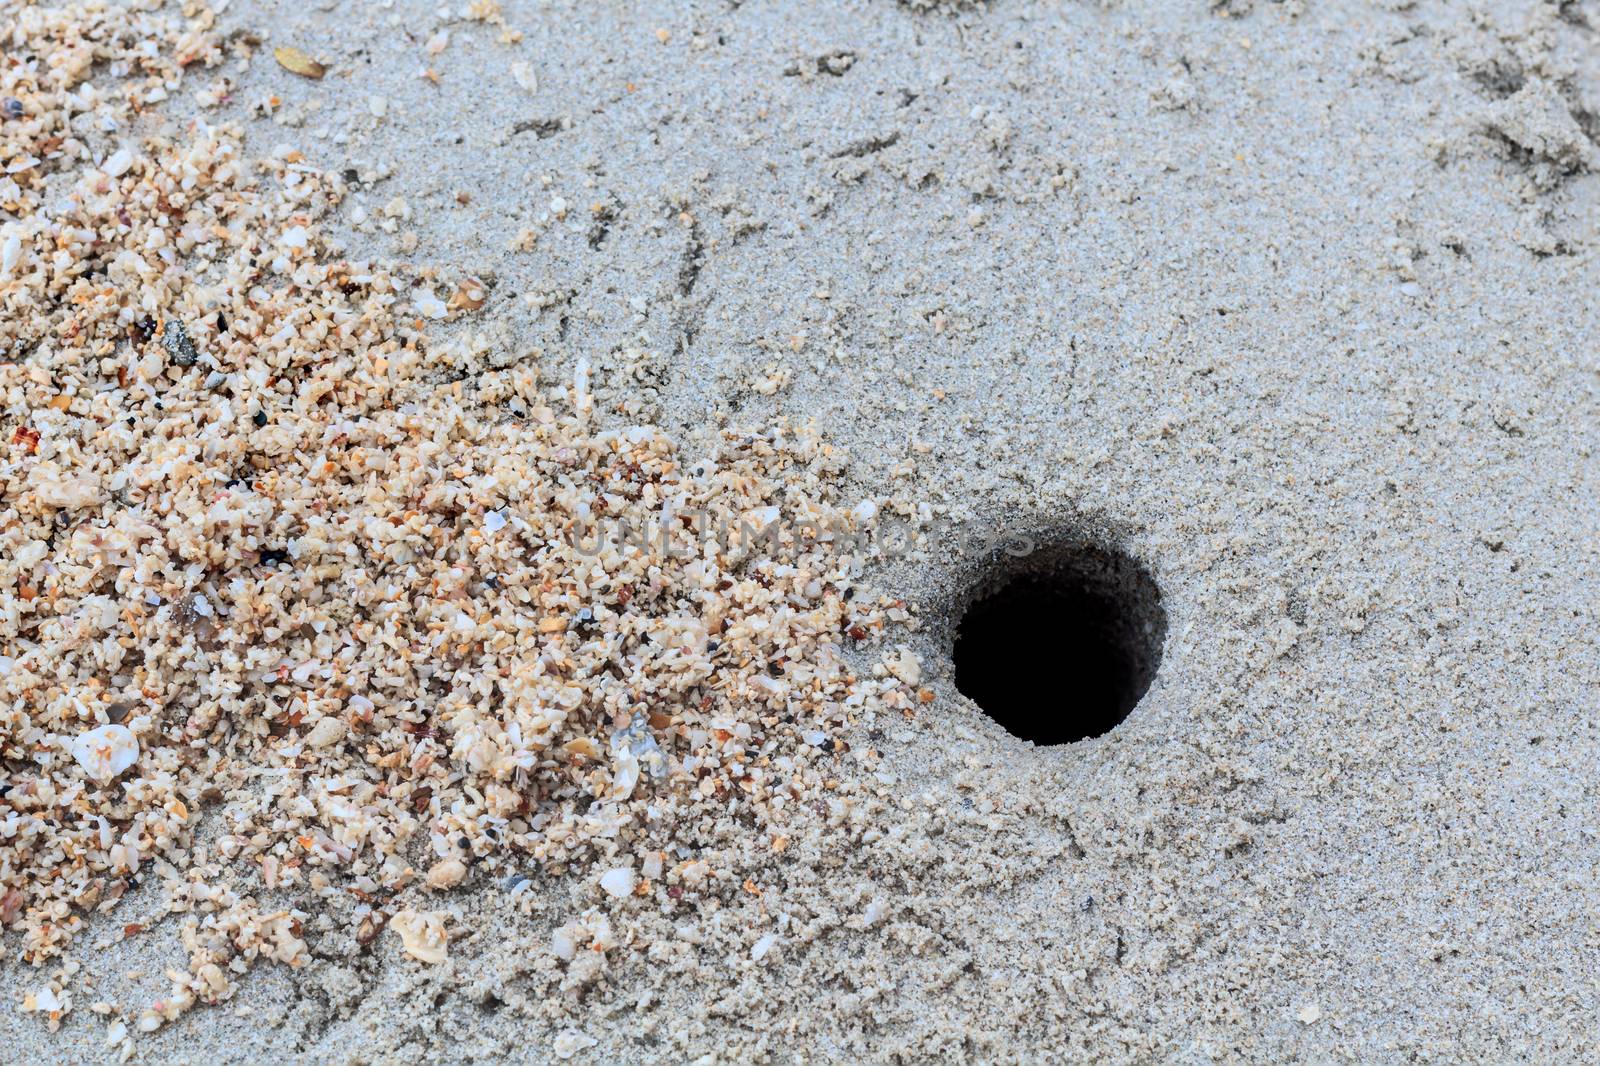 Crab hole on the Tropical Beach by yeekazar